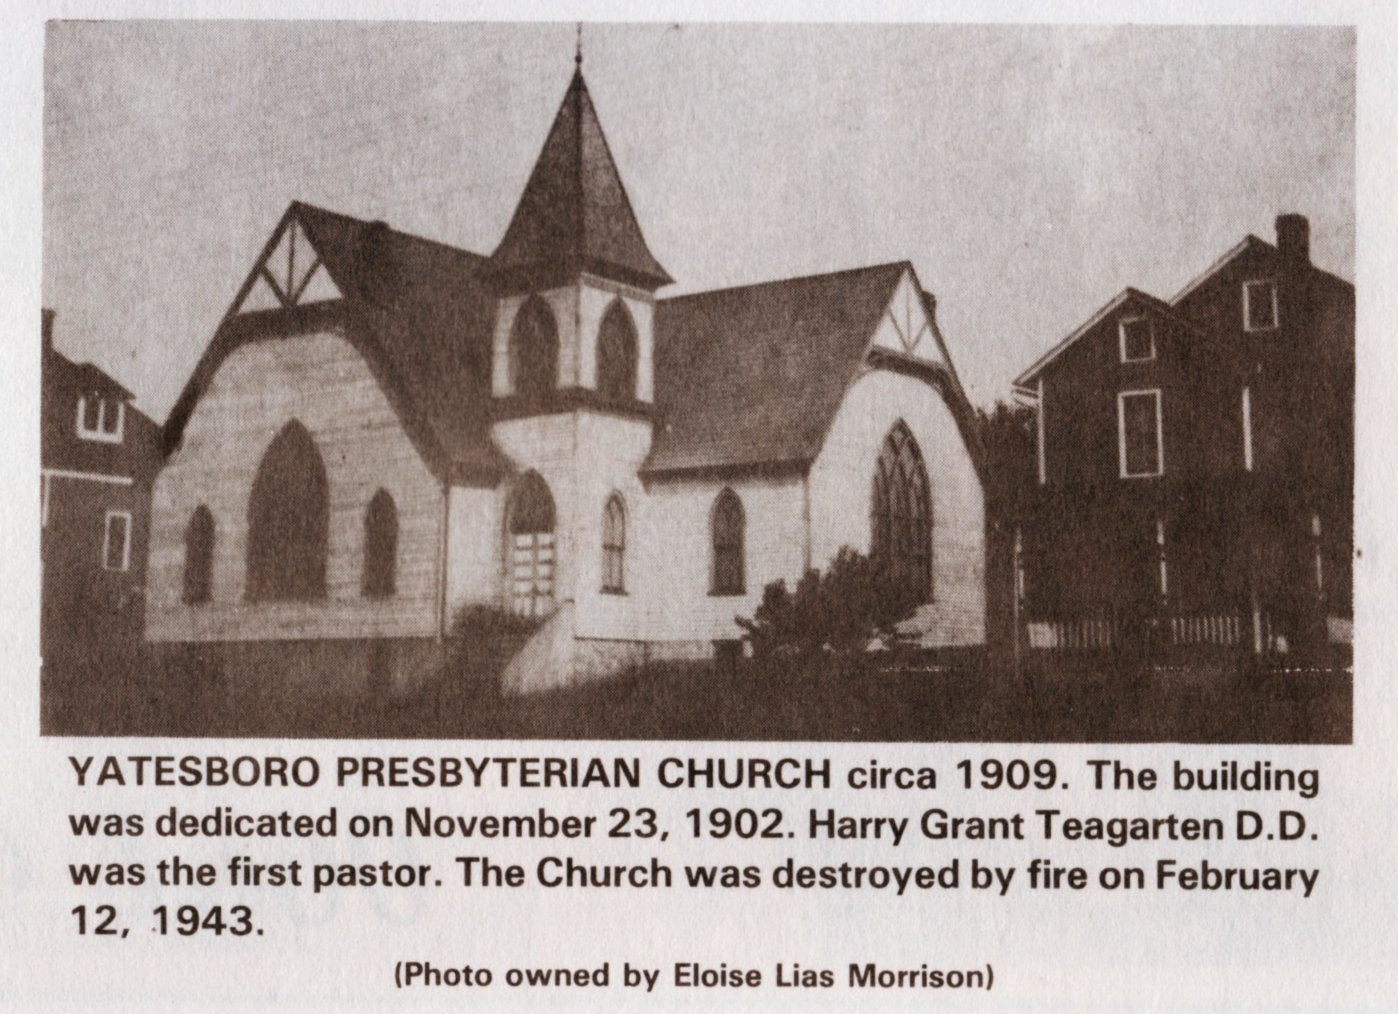 Yatesboro Presbyterian Church circa 1909.